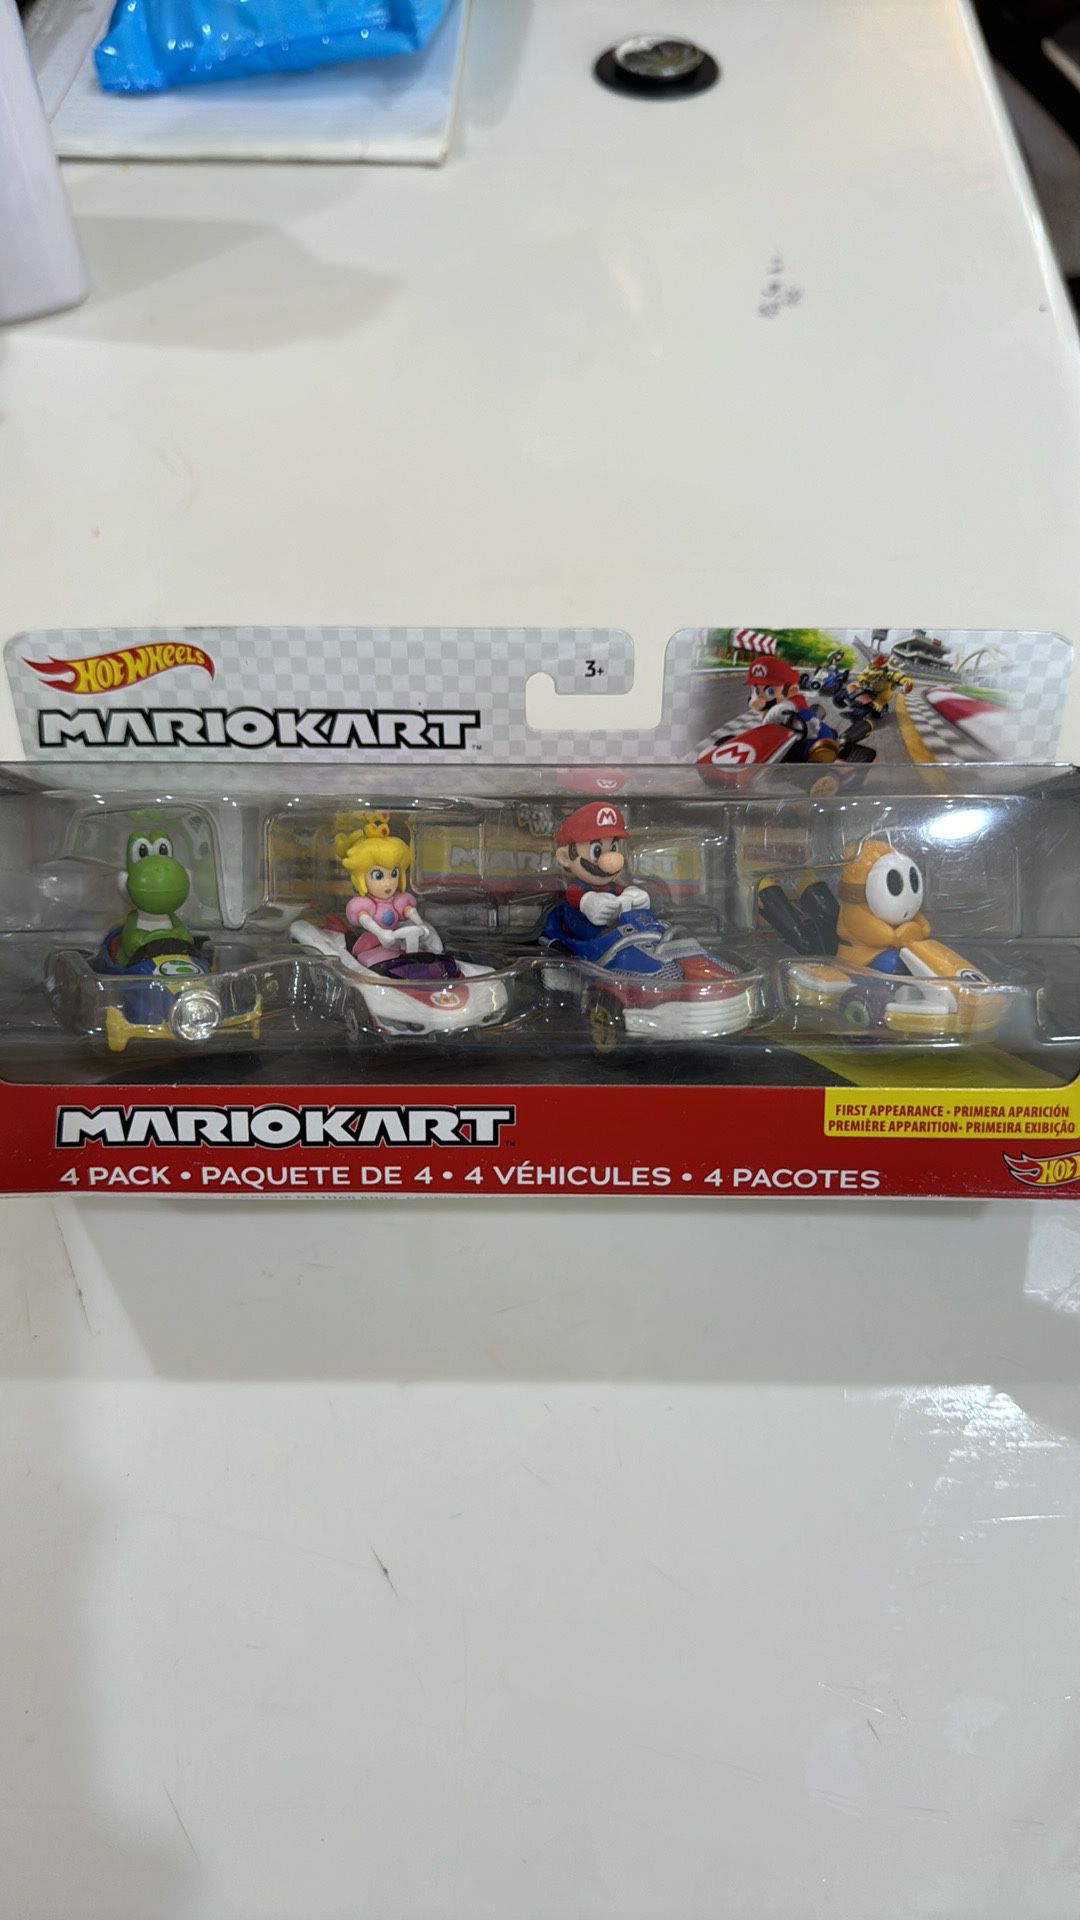 MarioKart hot wheels